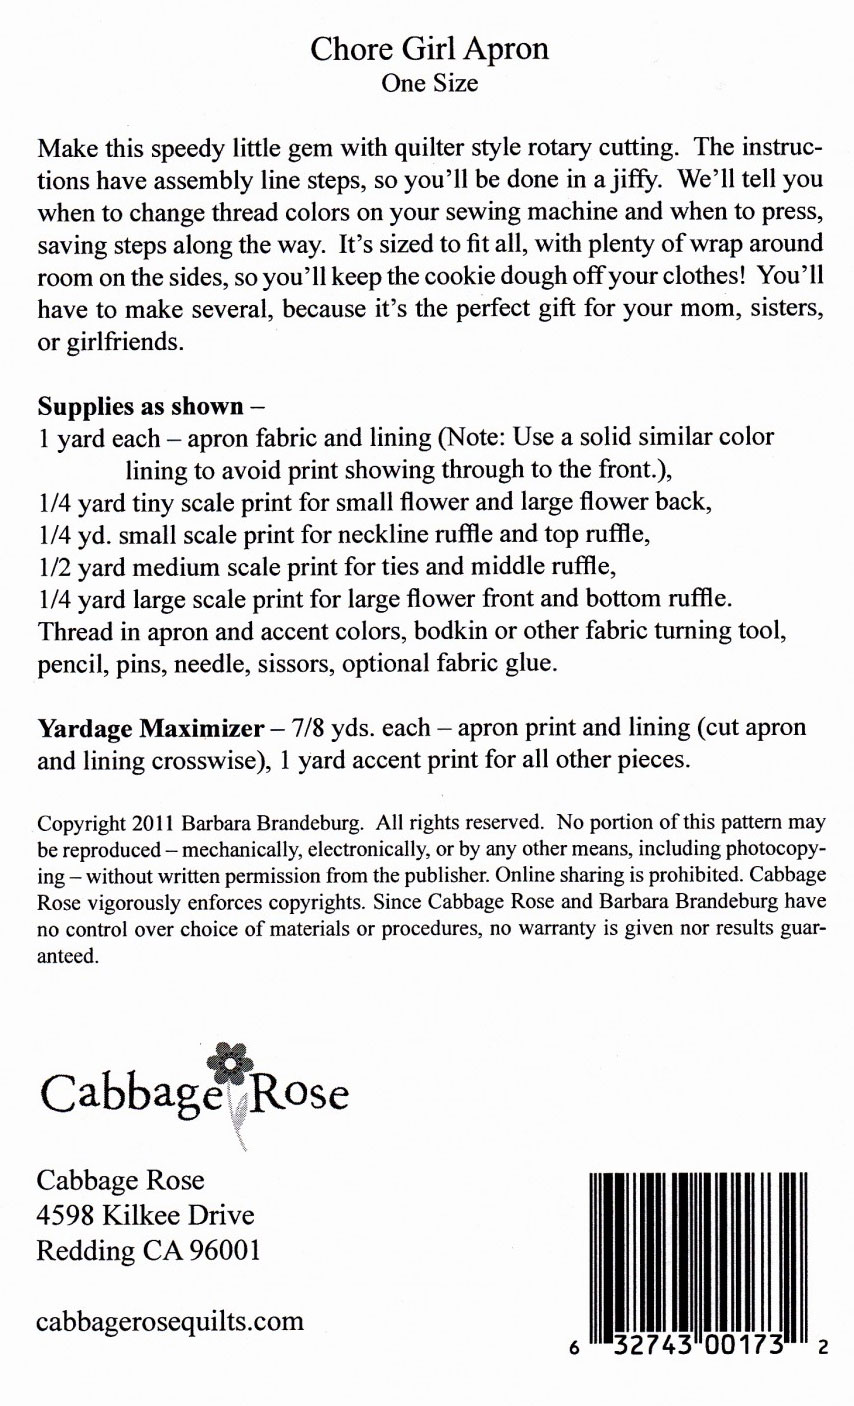 Cabbage Rose Sassy Little Apron Pattern